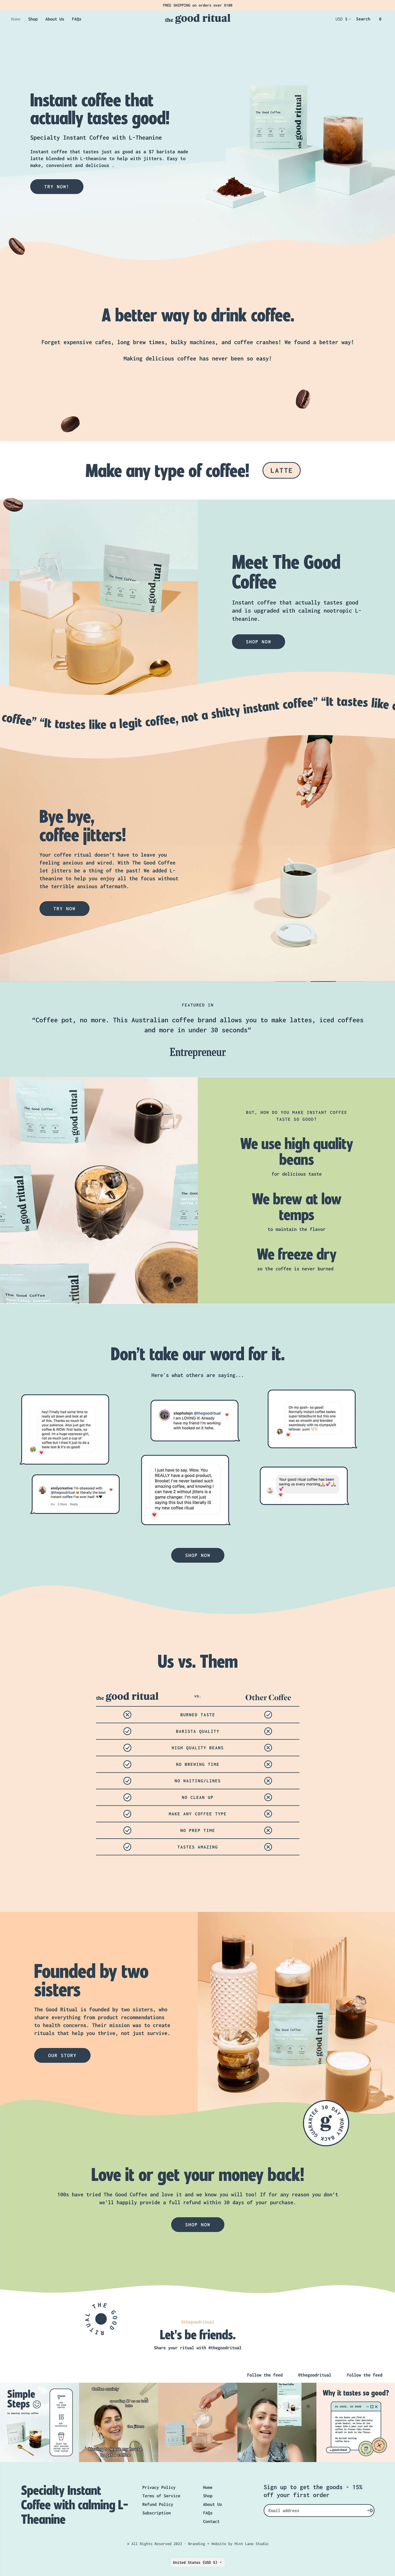 Shopify Website Design Inspiration - The Good Ritual